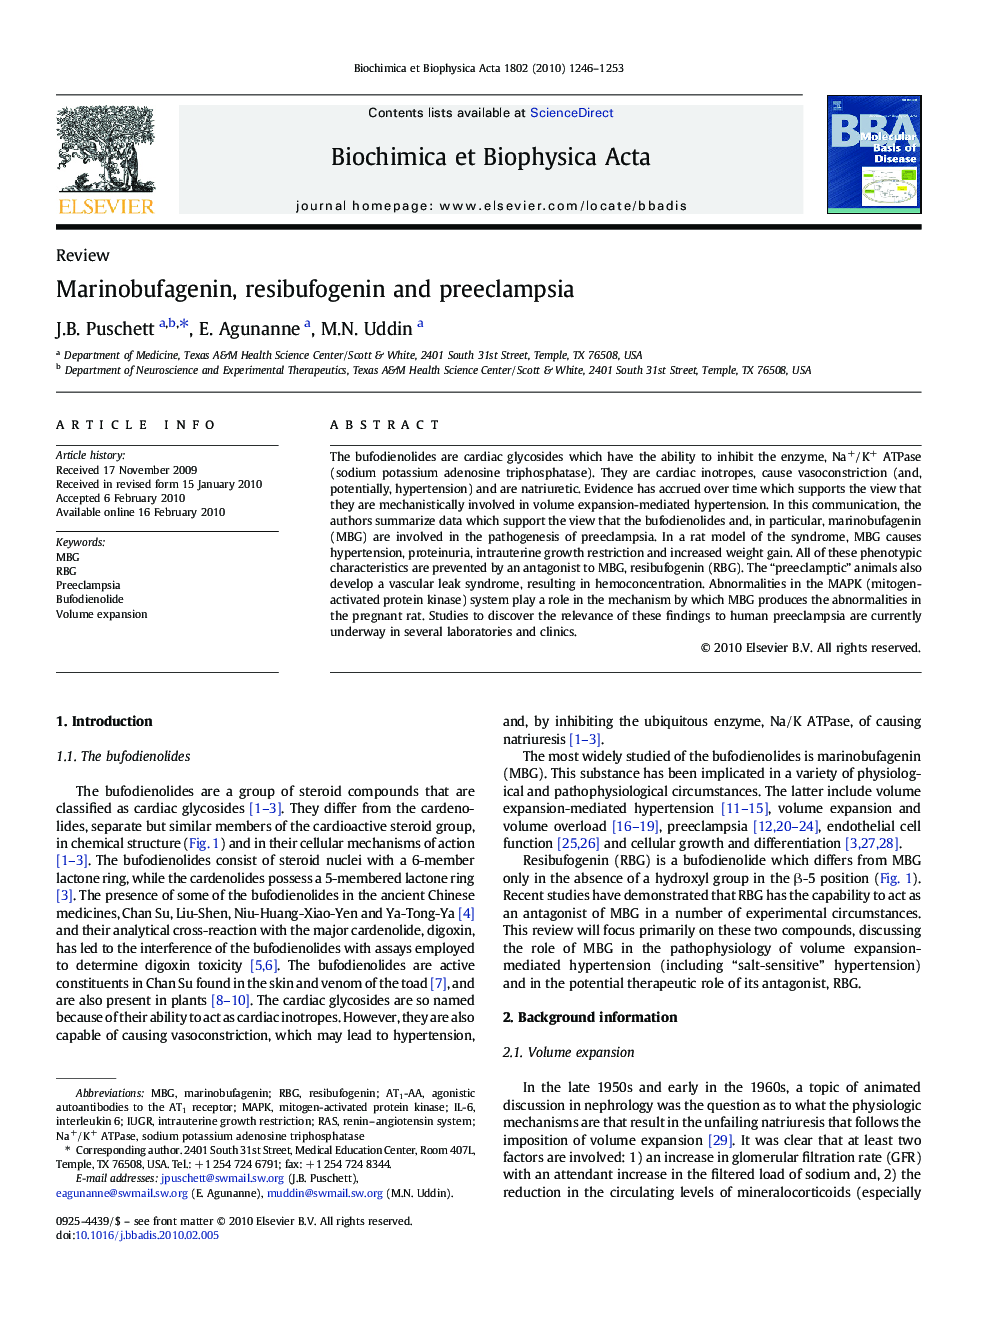 Marinobufagenin, resibufogenin and preeclampsia